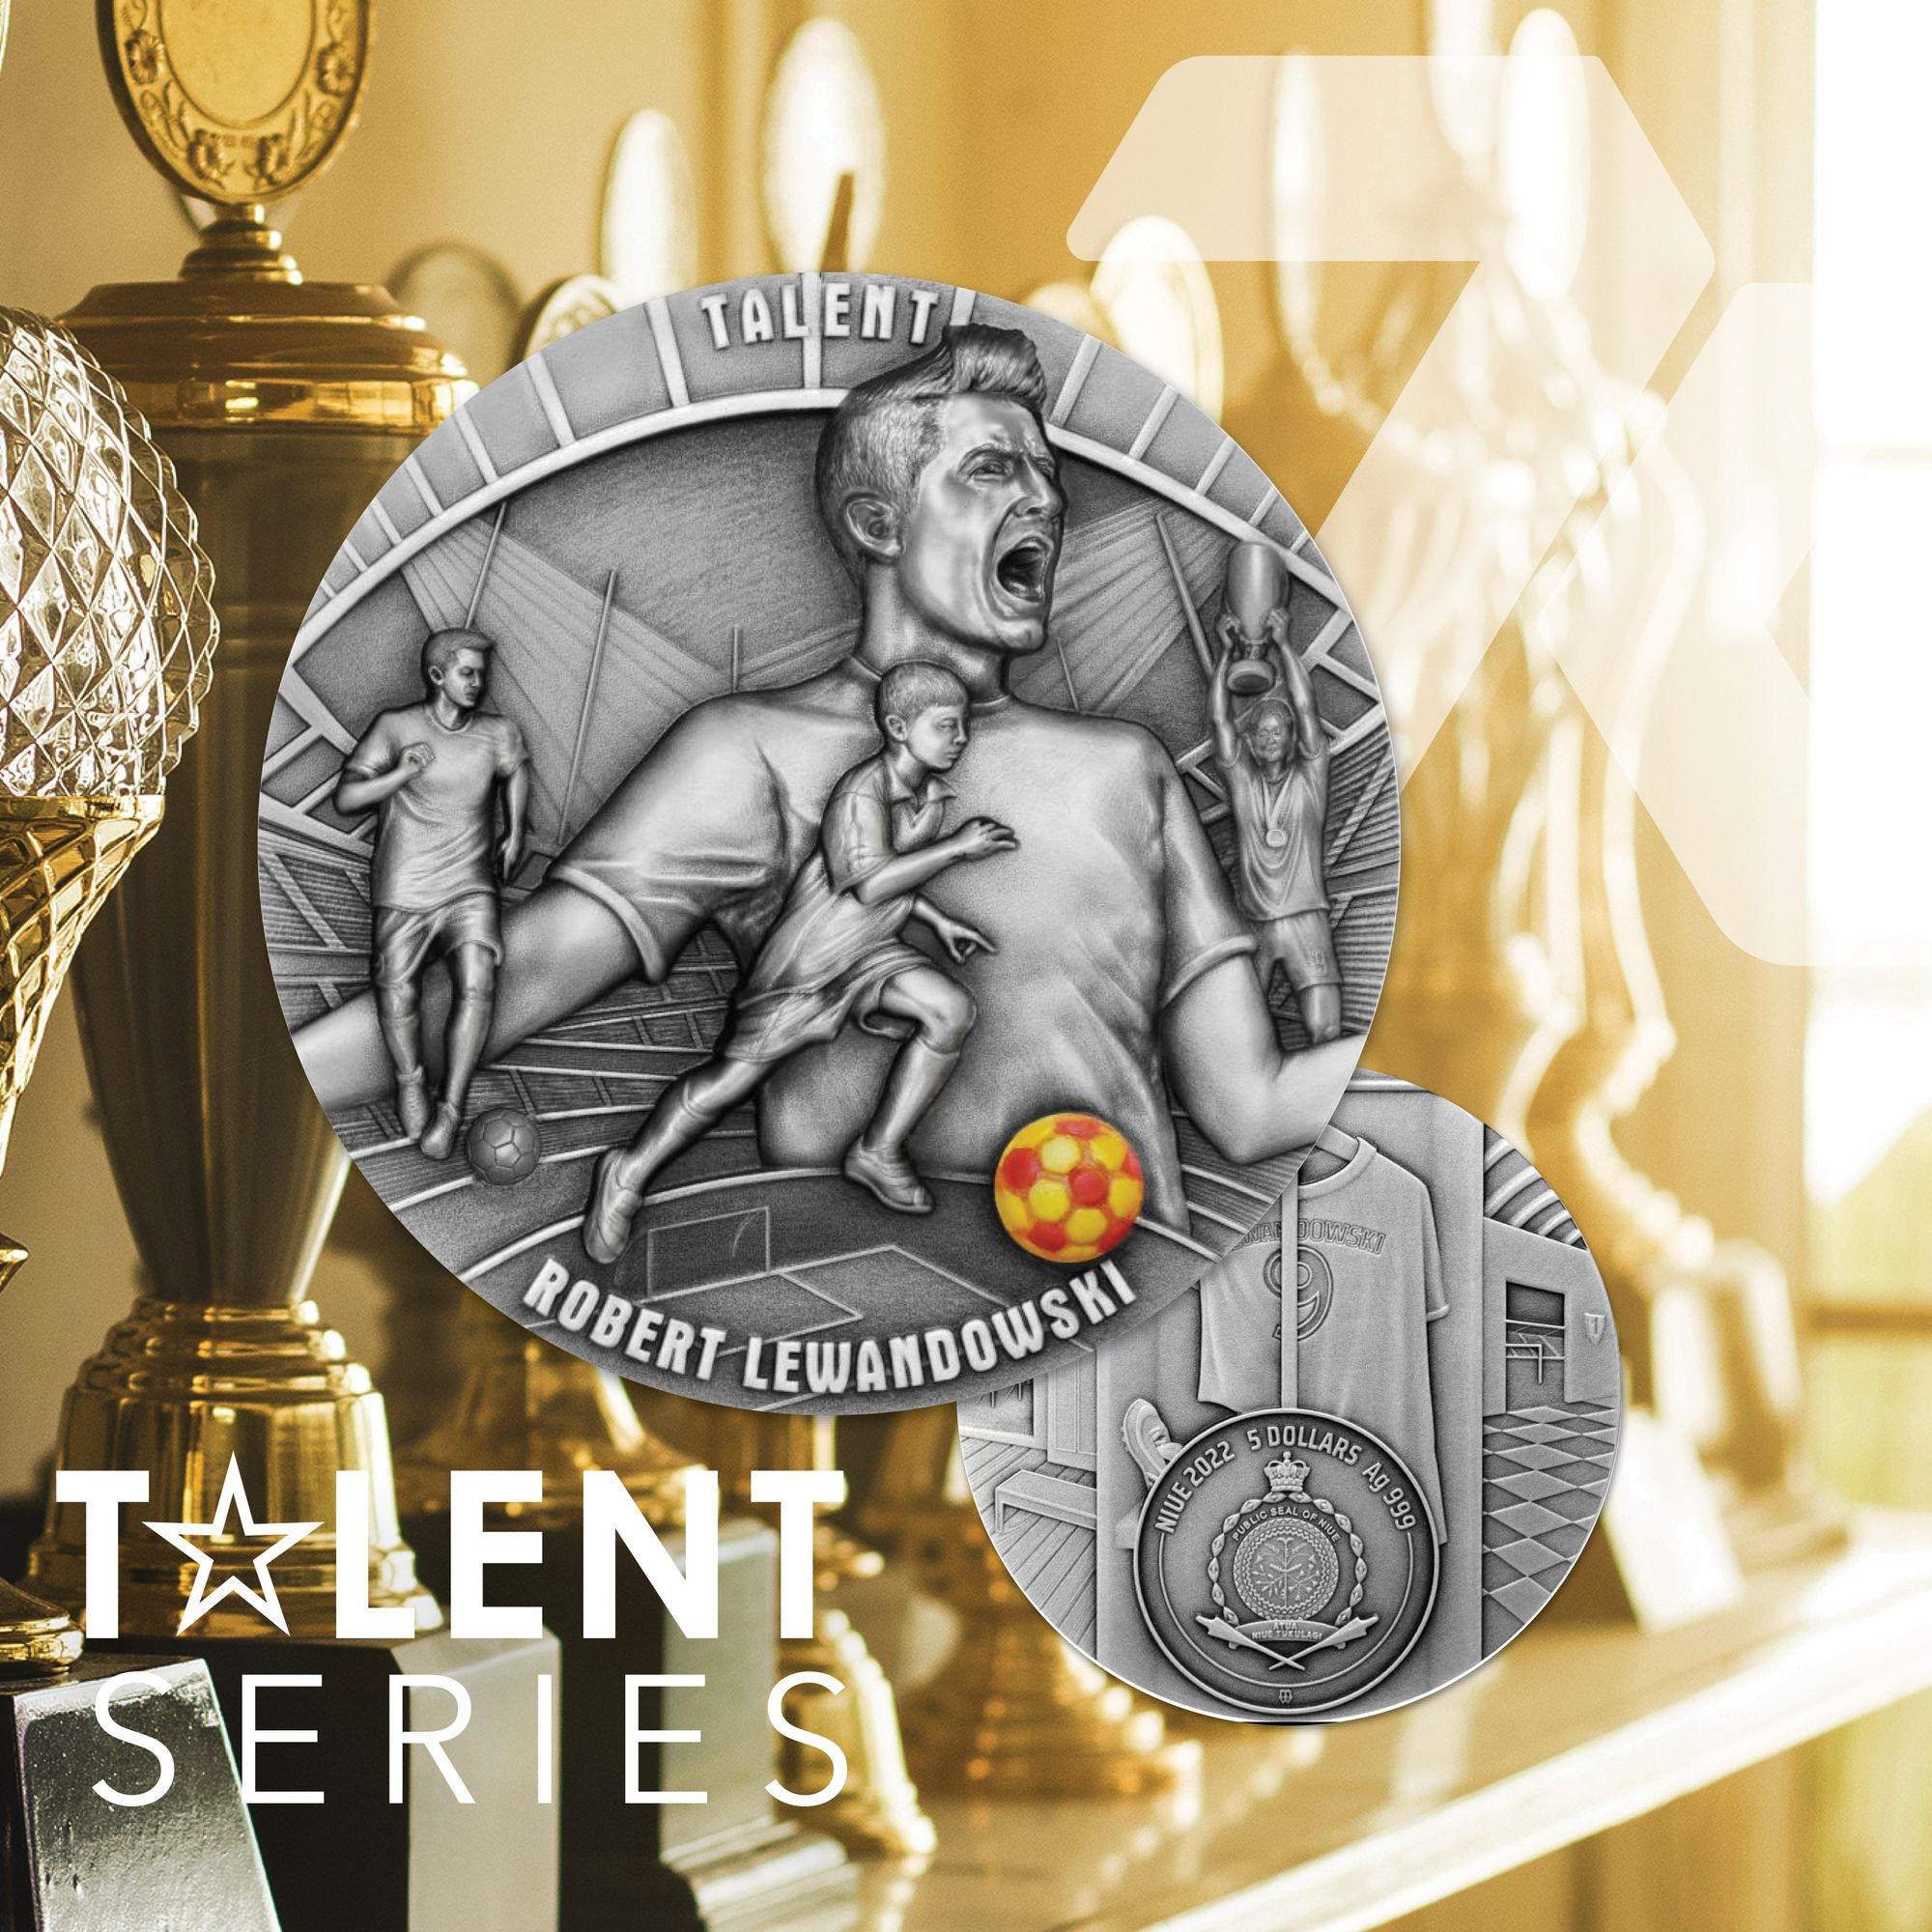 2022 Talent Series Robert Lewandowski 2 oz Silver Coin